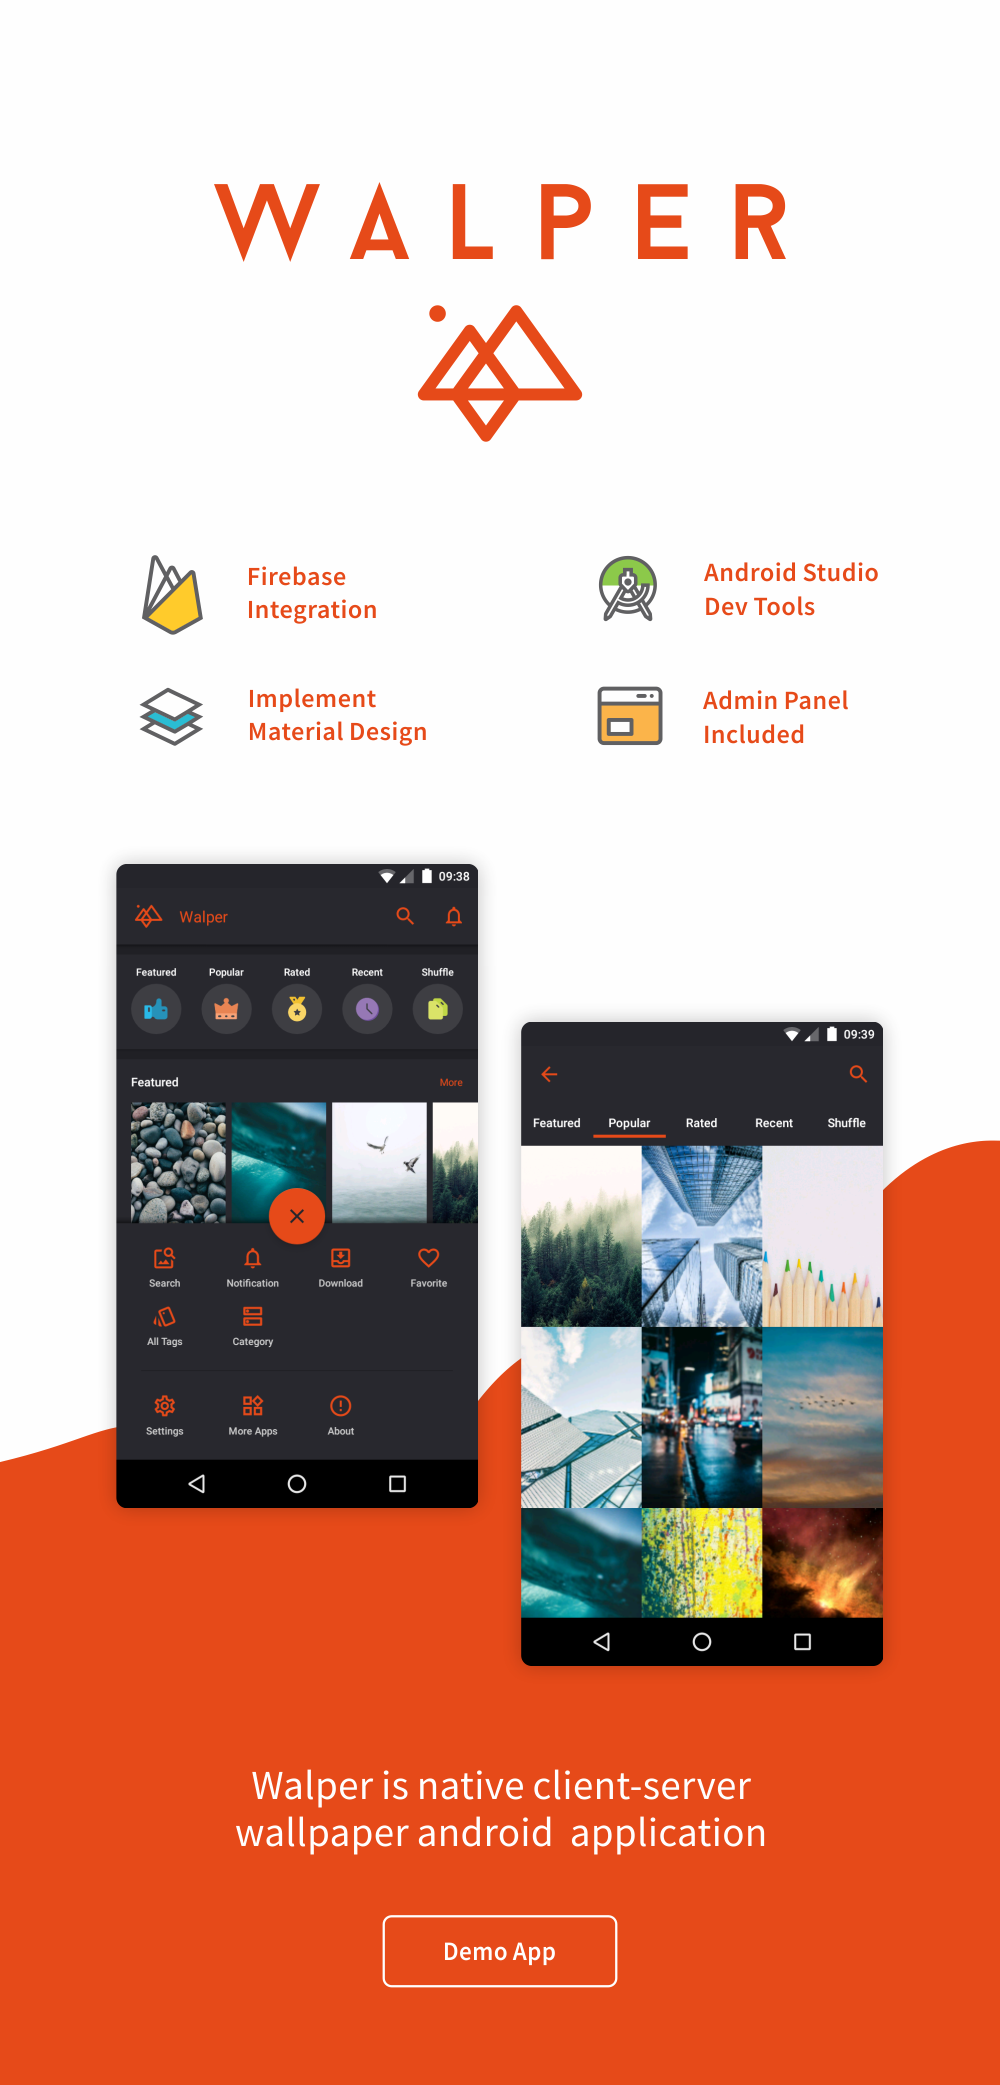 Walper - Wallpaper Android Application 1.2 - 1